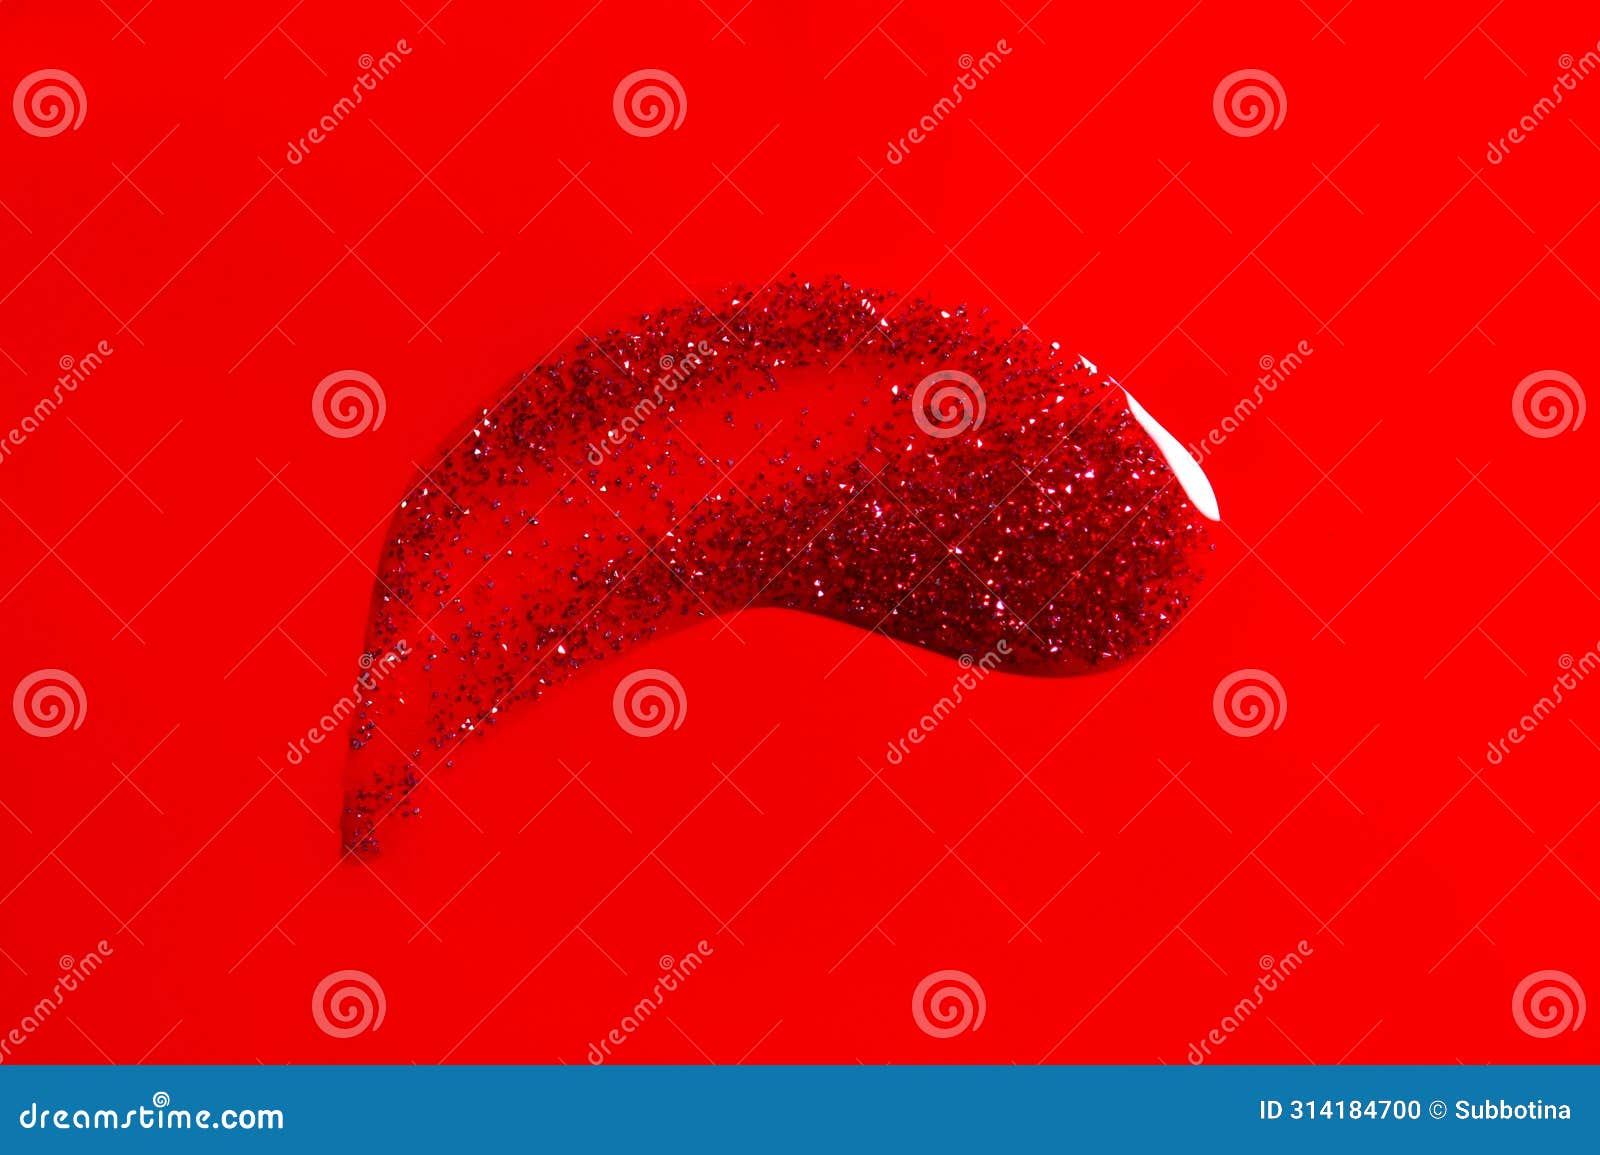 red glitter nail polish uv gel smear. nailpolish liquid smudge on red background, surface